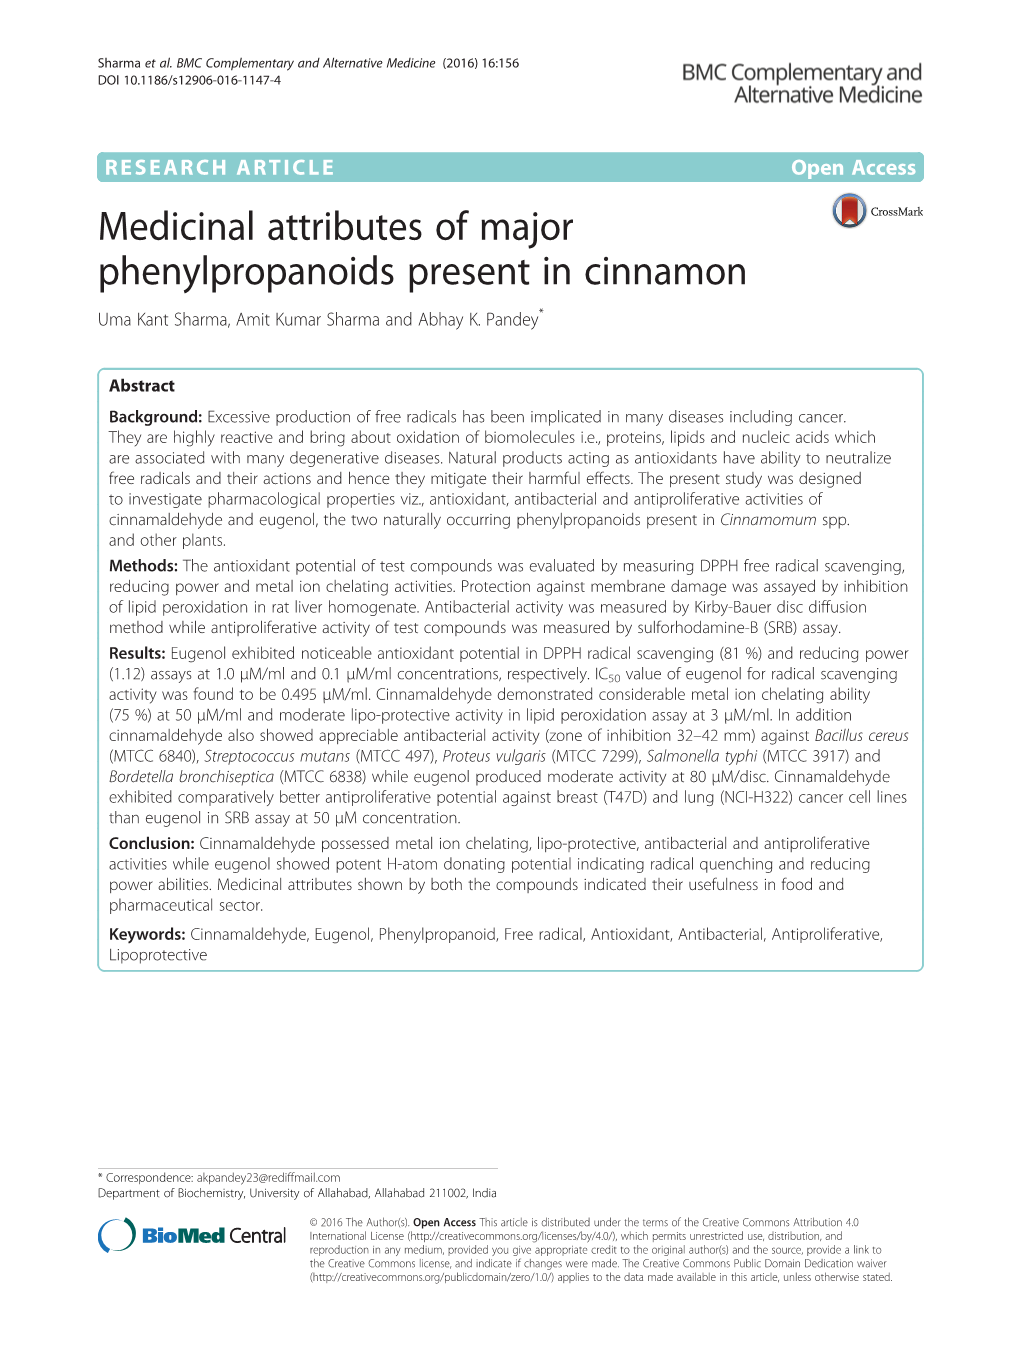 Medicinal Attributes of Major Phenylpropanoids Present in Cinnamon Uma Kant Sharma, Amit Kumar Sharma and Abhay K